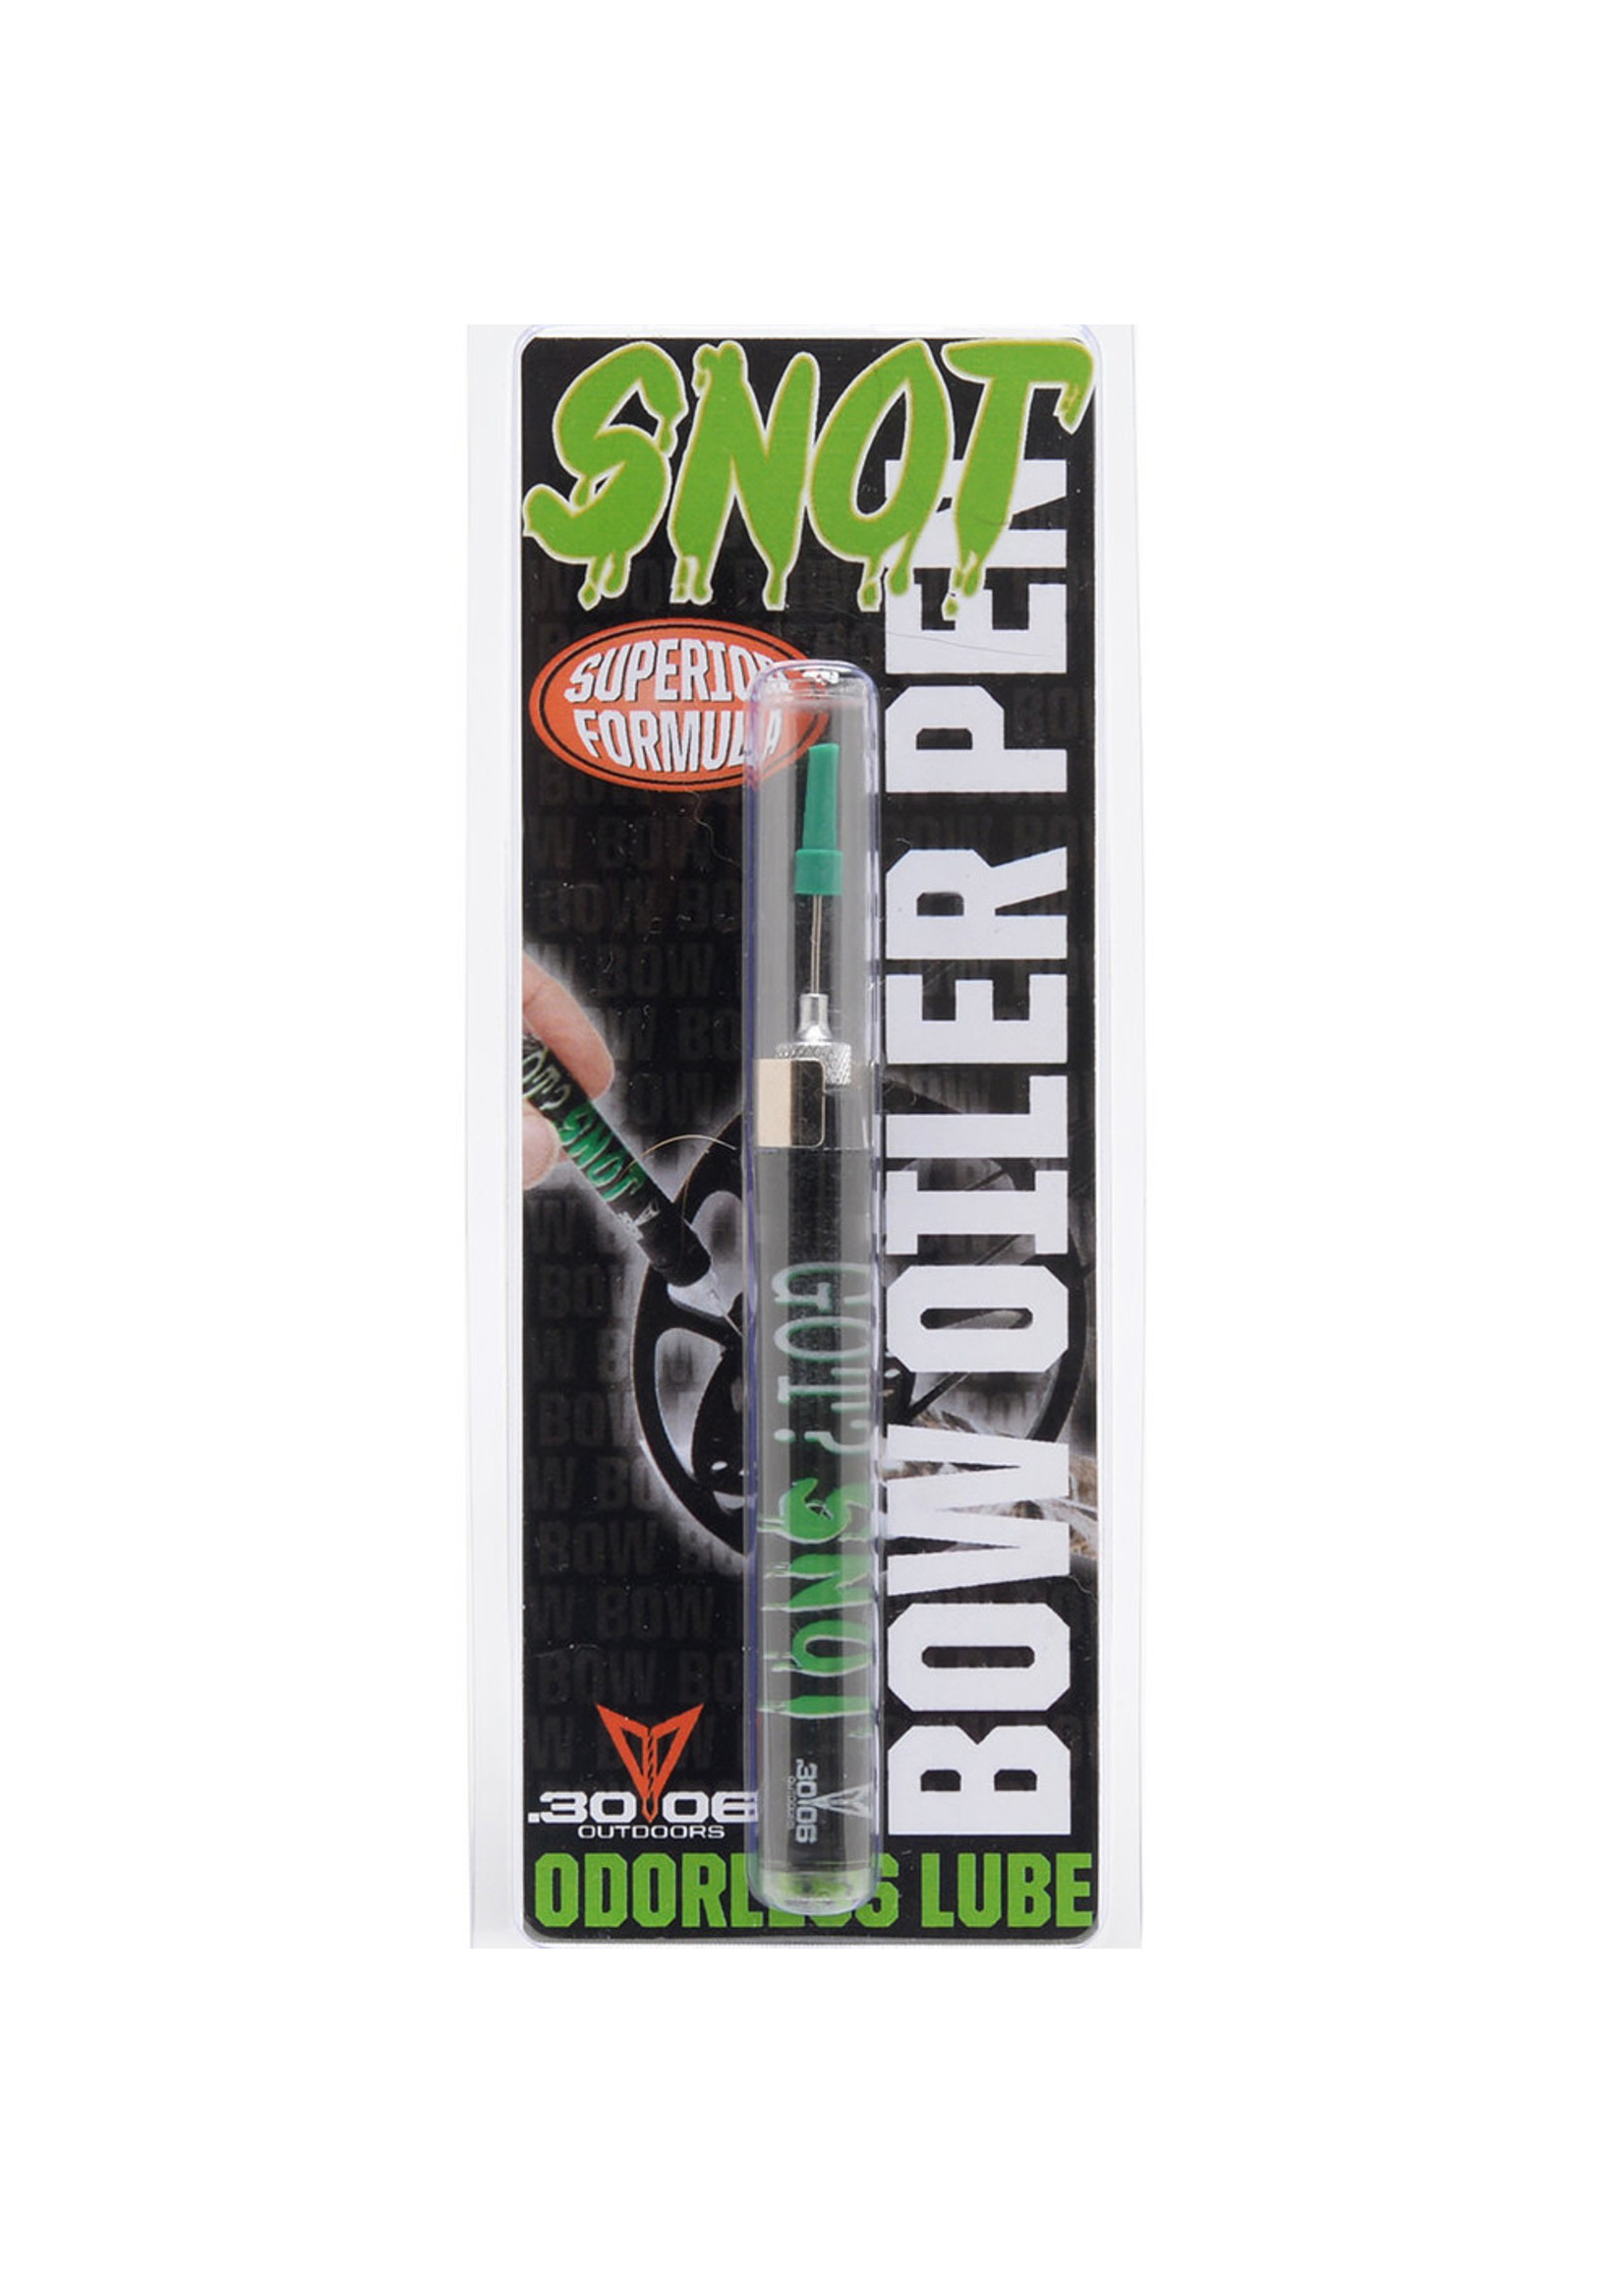 3006 Outdoors bow snot odorless bow oiler pen